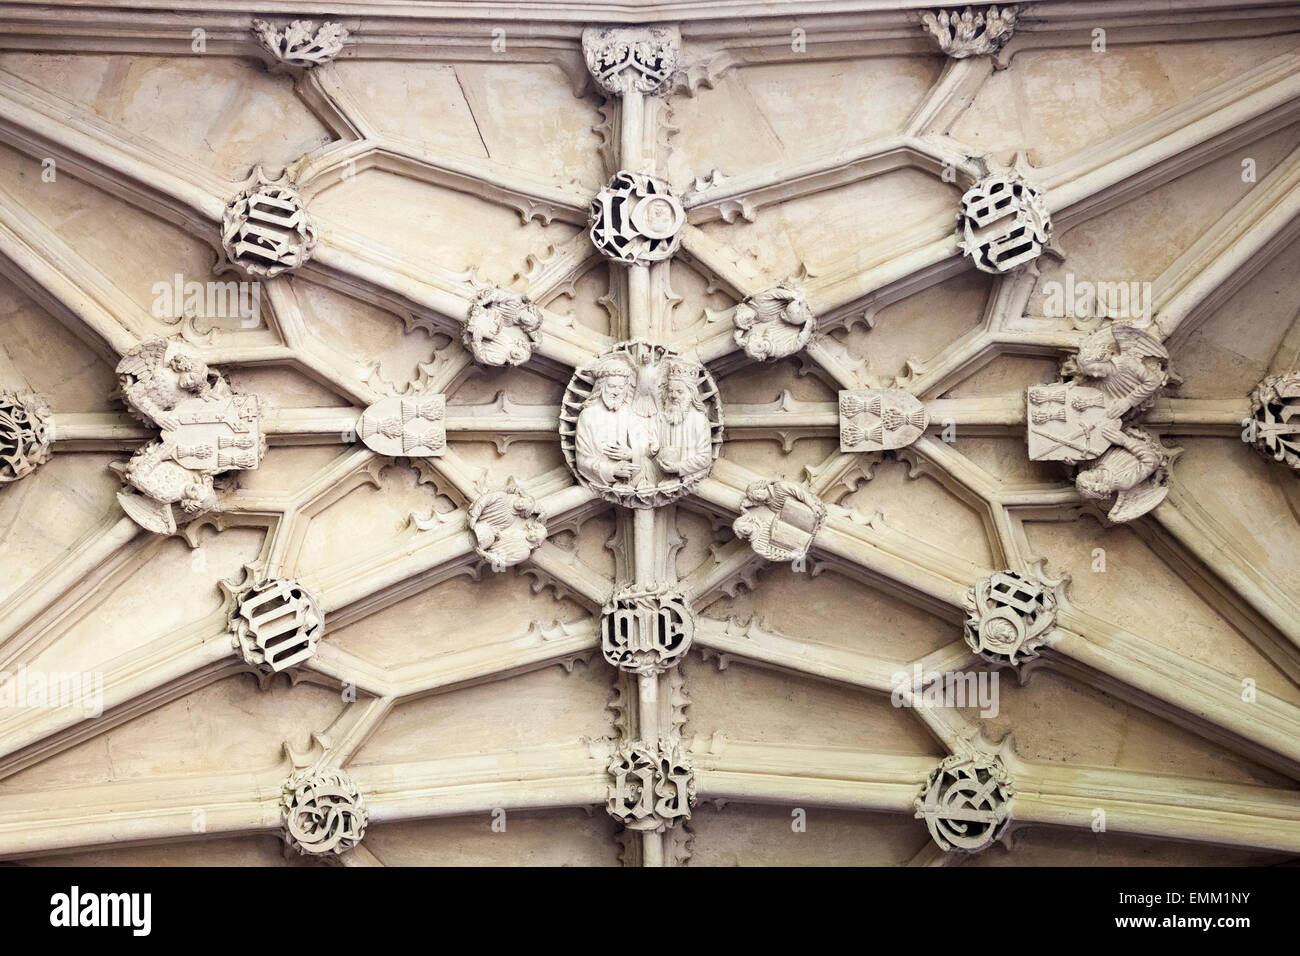 'Divinity School' plafond détail [Bodleian Library], Oxford, England, UK Banque D'Images